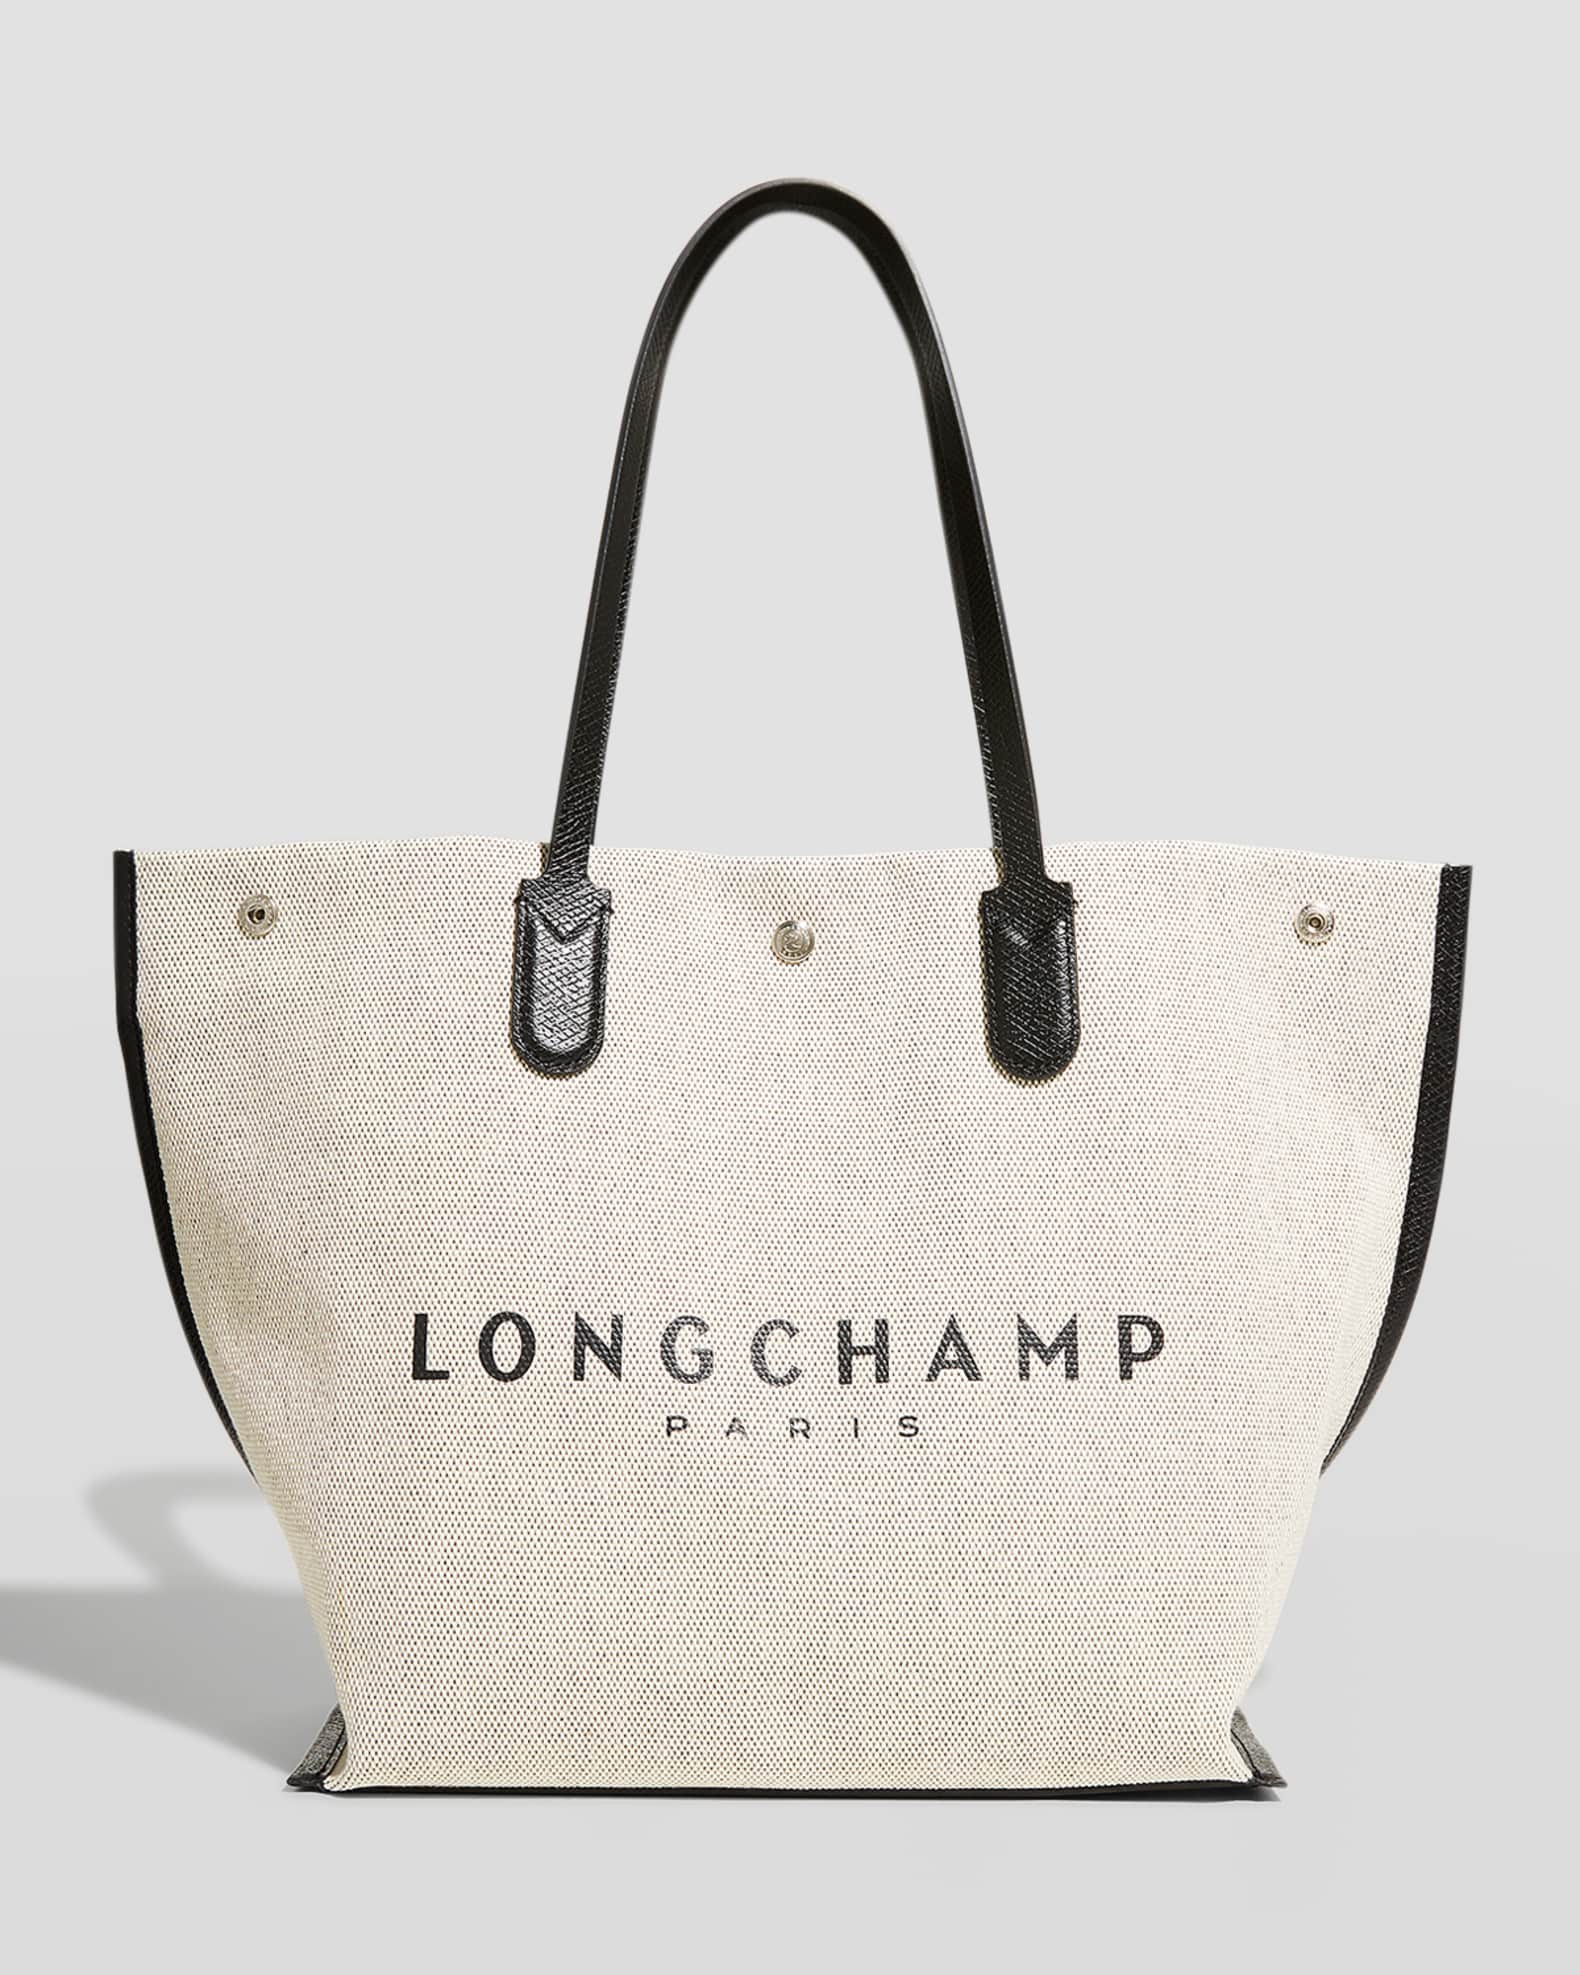 Longchamp Store Cologne